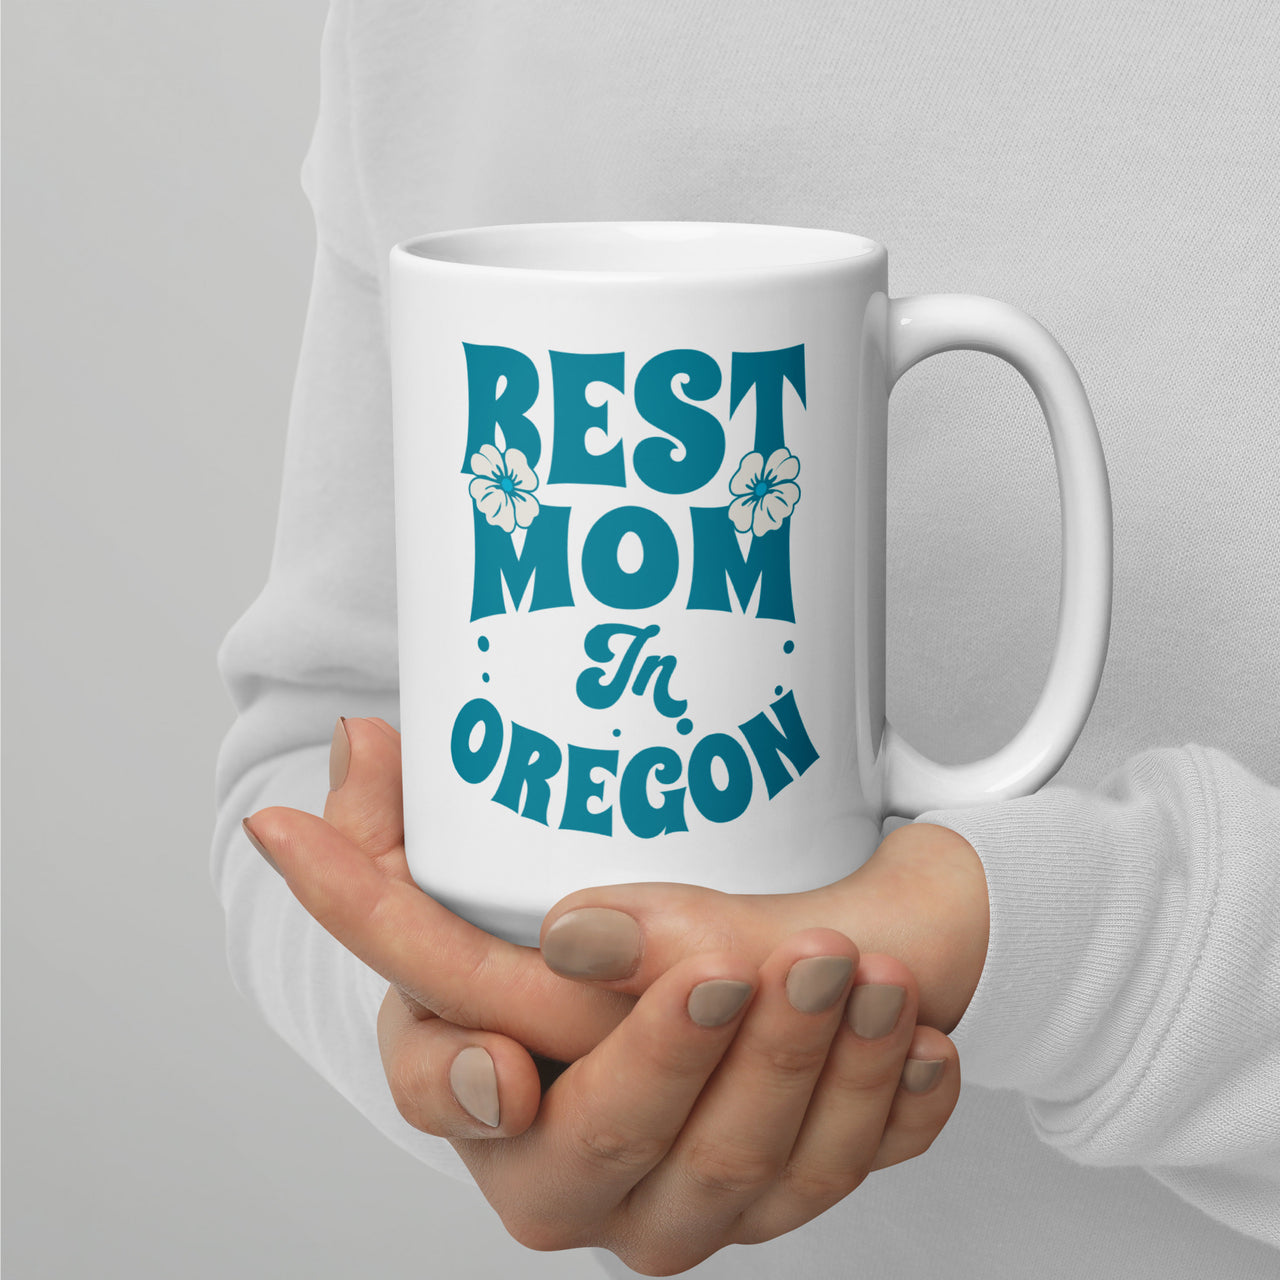 Best Mom in Oregon - White glossy mug